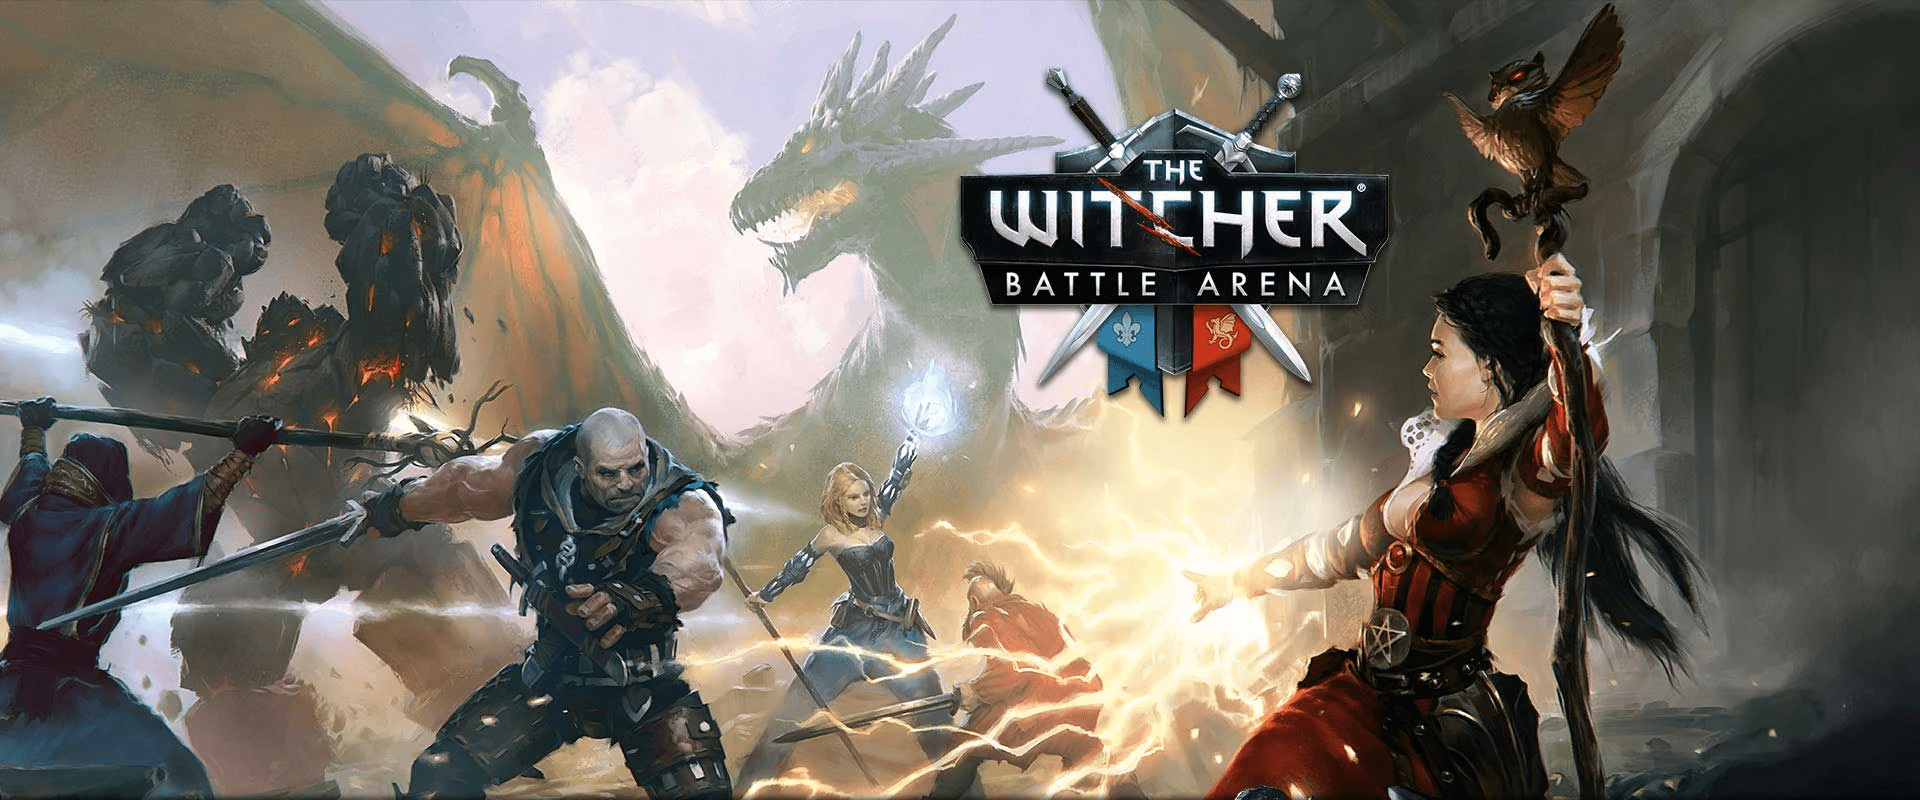 Witcher The Bellum Arena